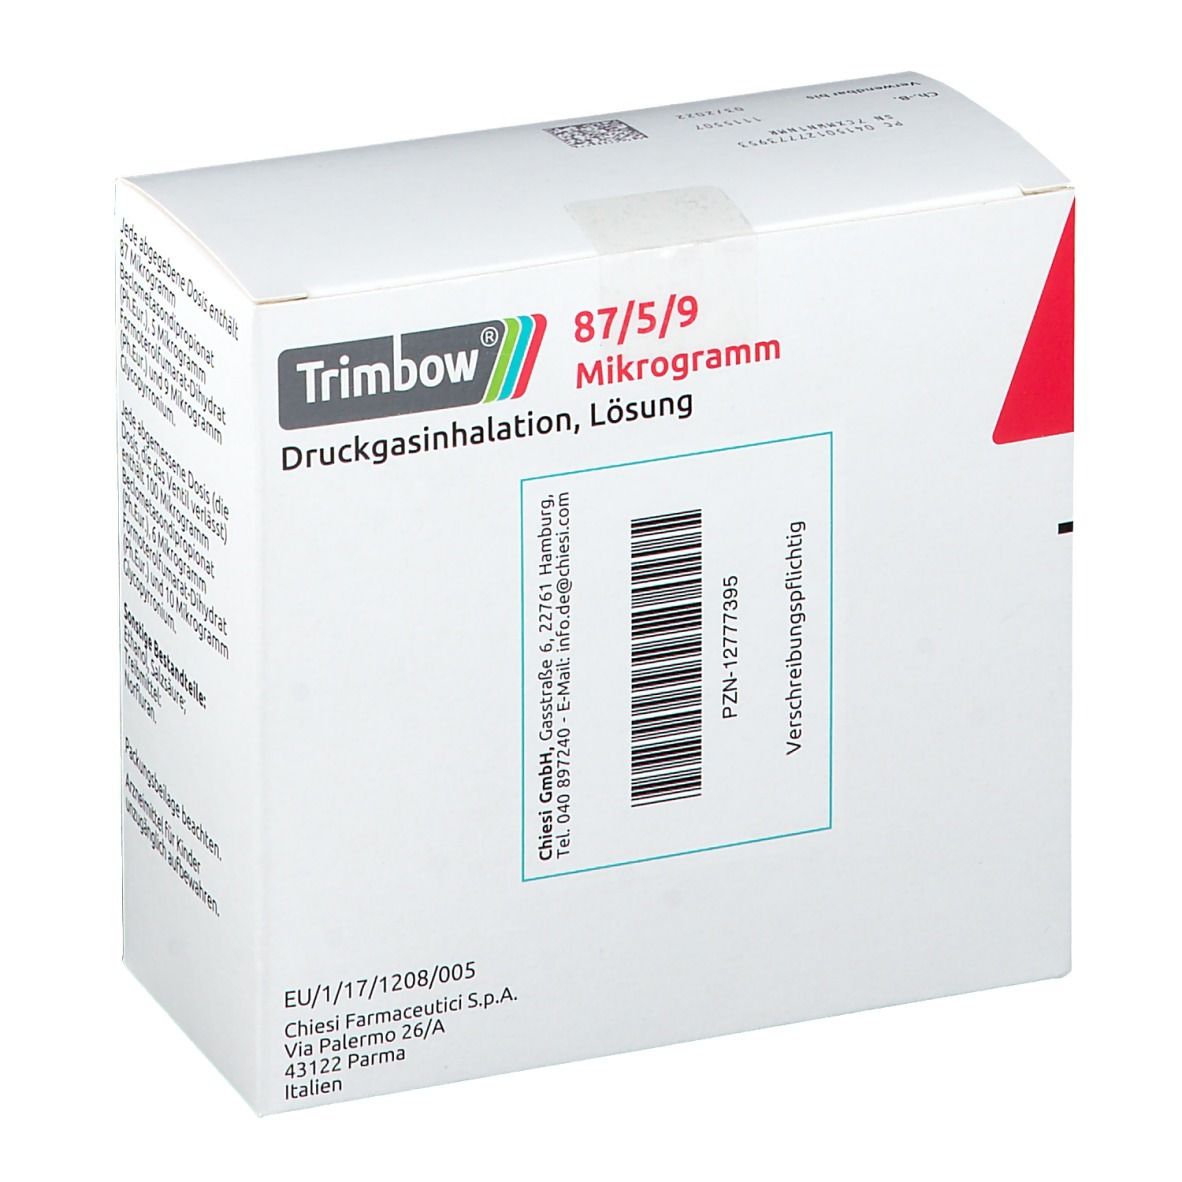 TRIMBOW® 87 µg/5 µg/9 µg